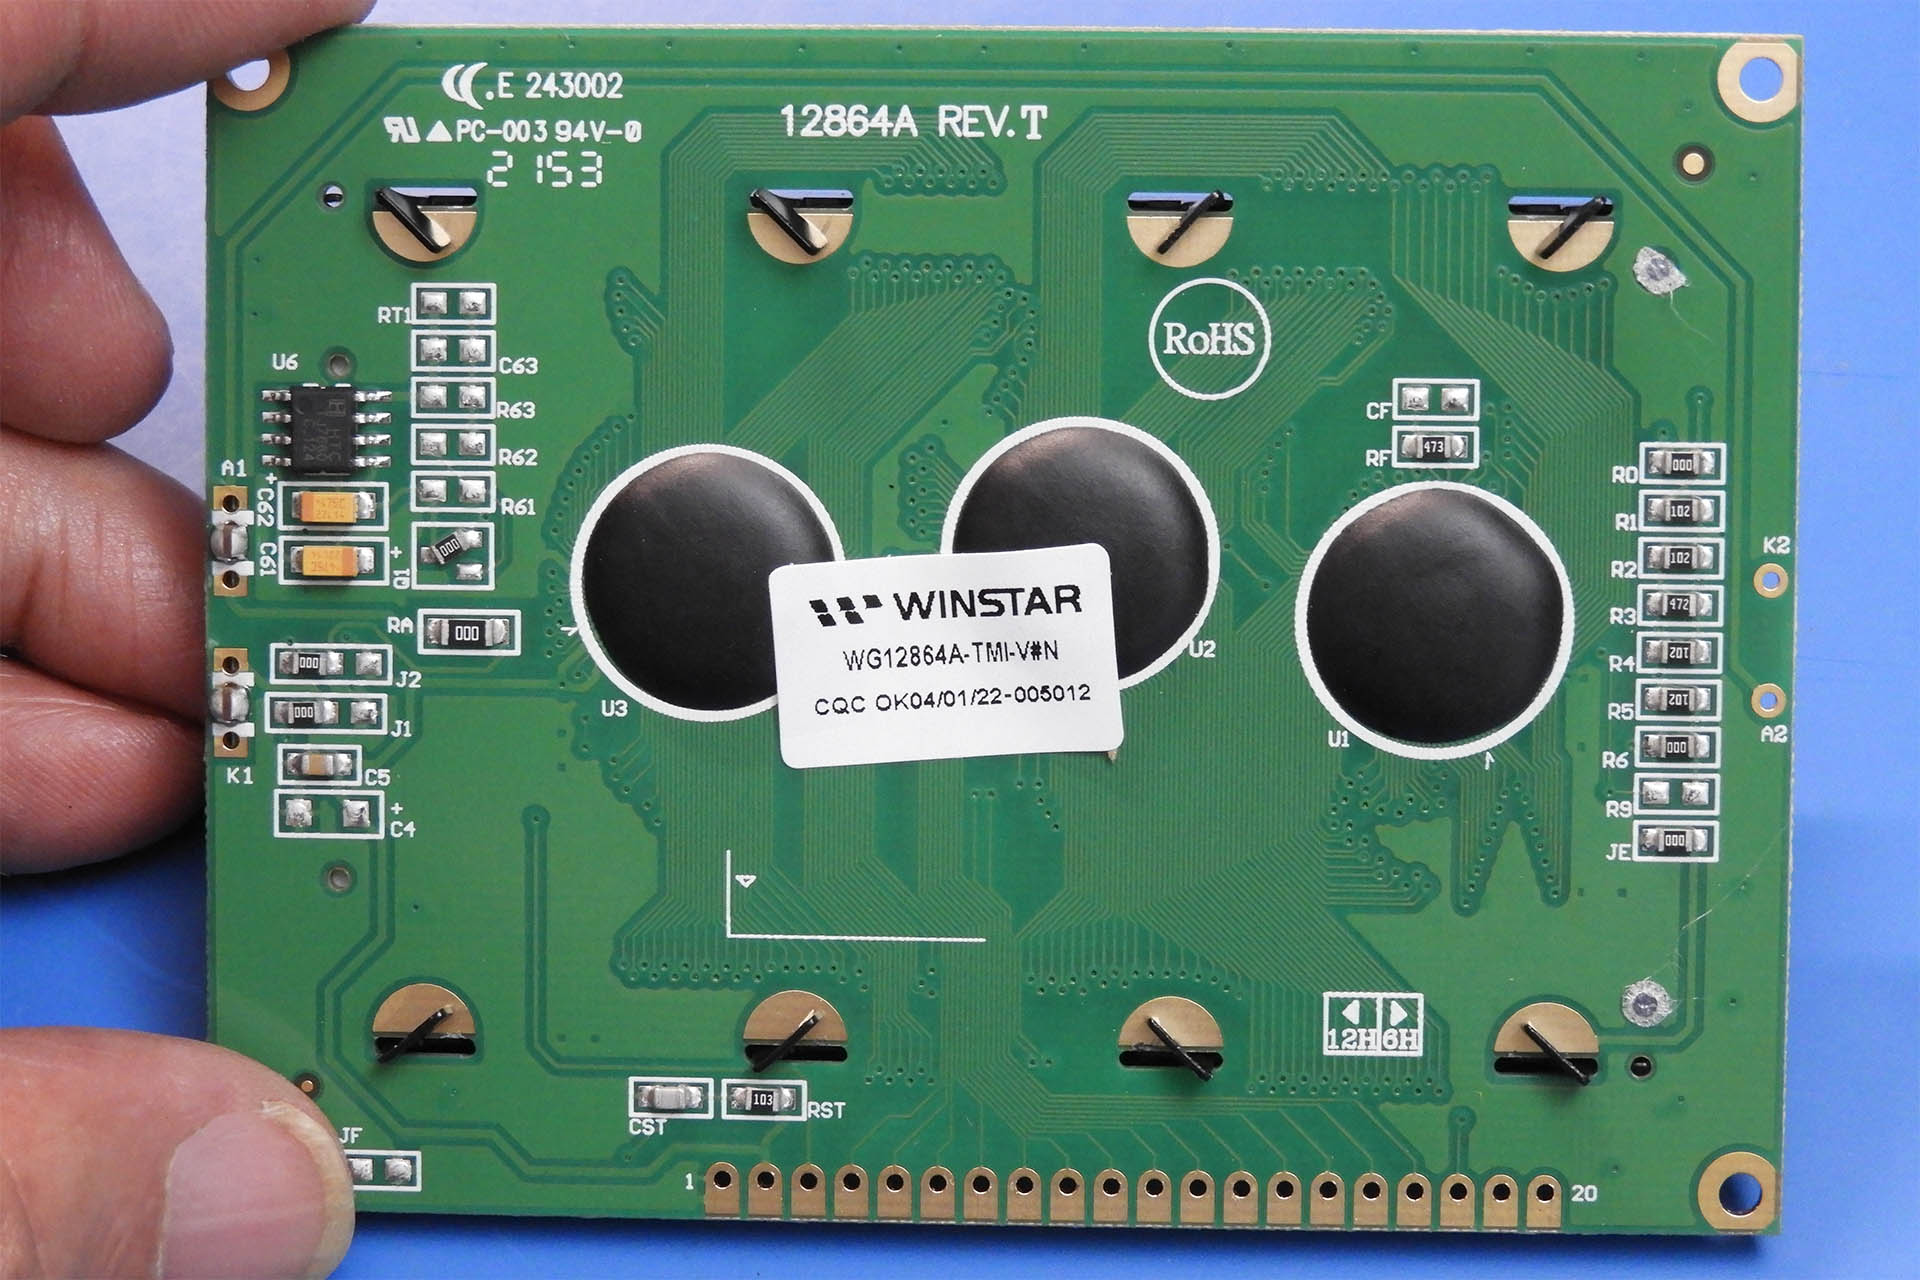 Back of Winstar WN12864A-TMI-VN